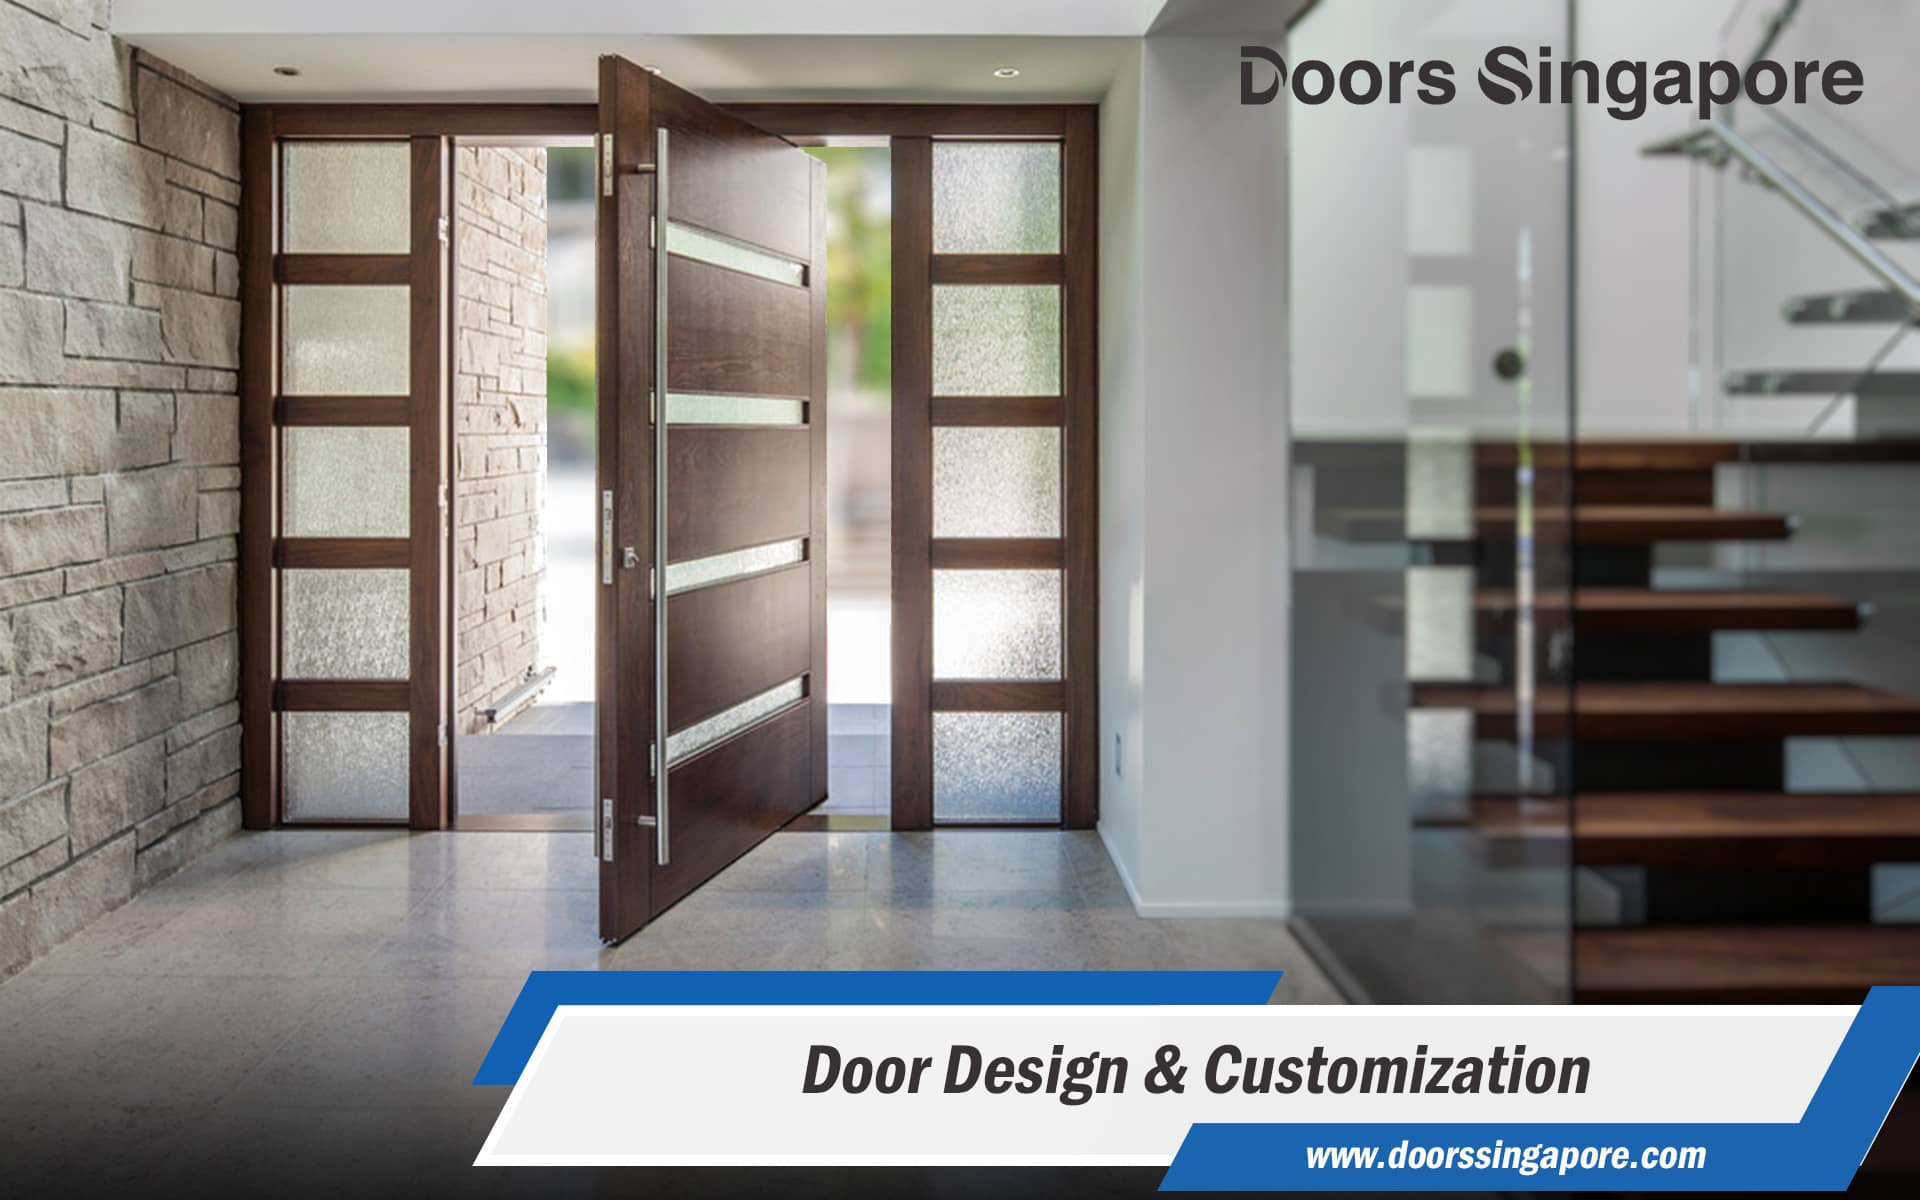 Door Design & Customization